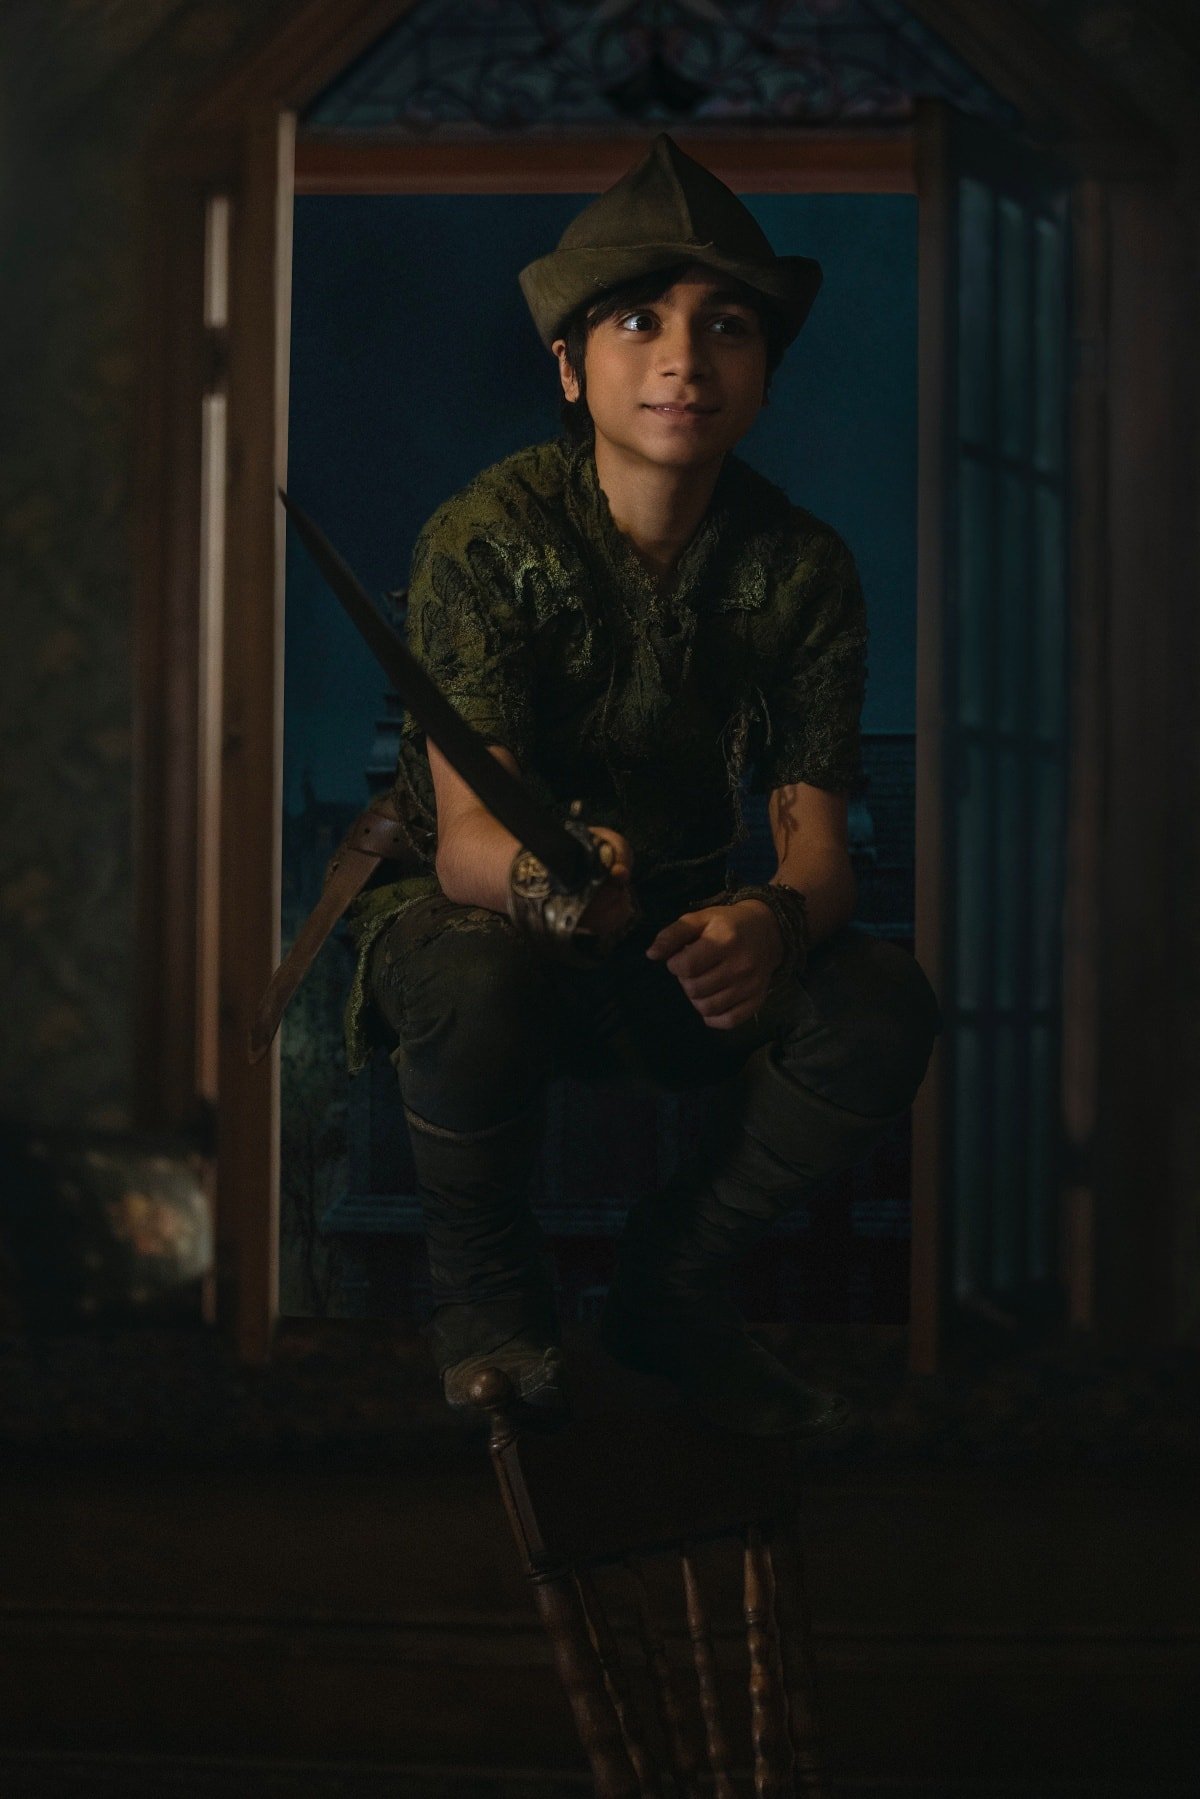 Alexander Molony as Peter Pan in the upcoming fantasy adventure film Peter Pan & Wendy